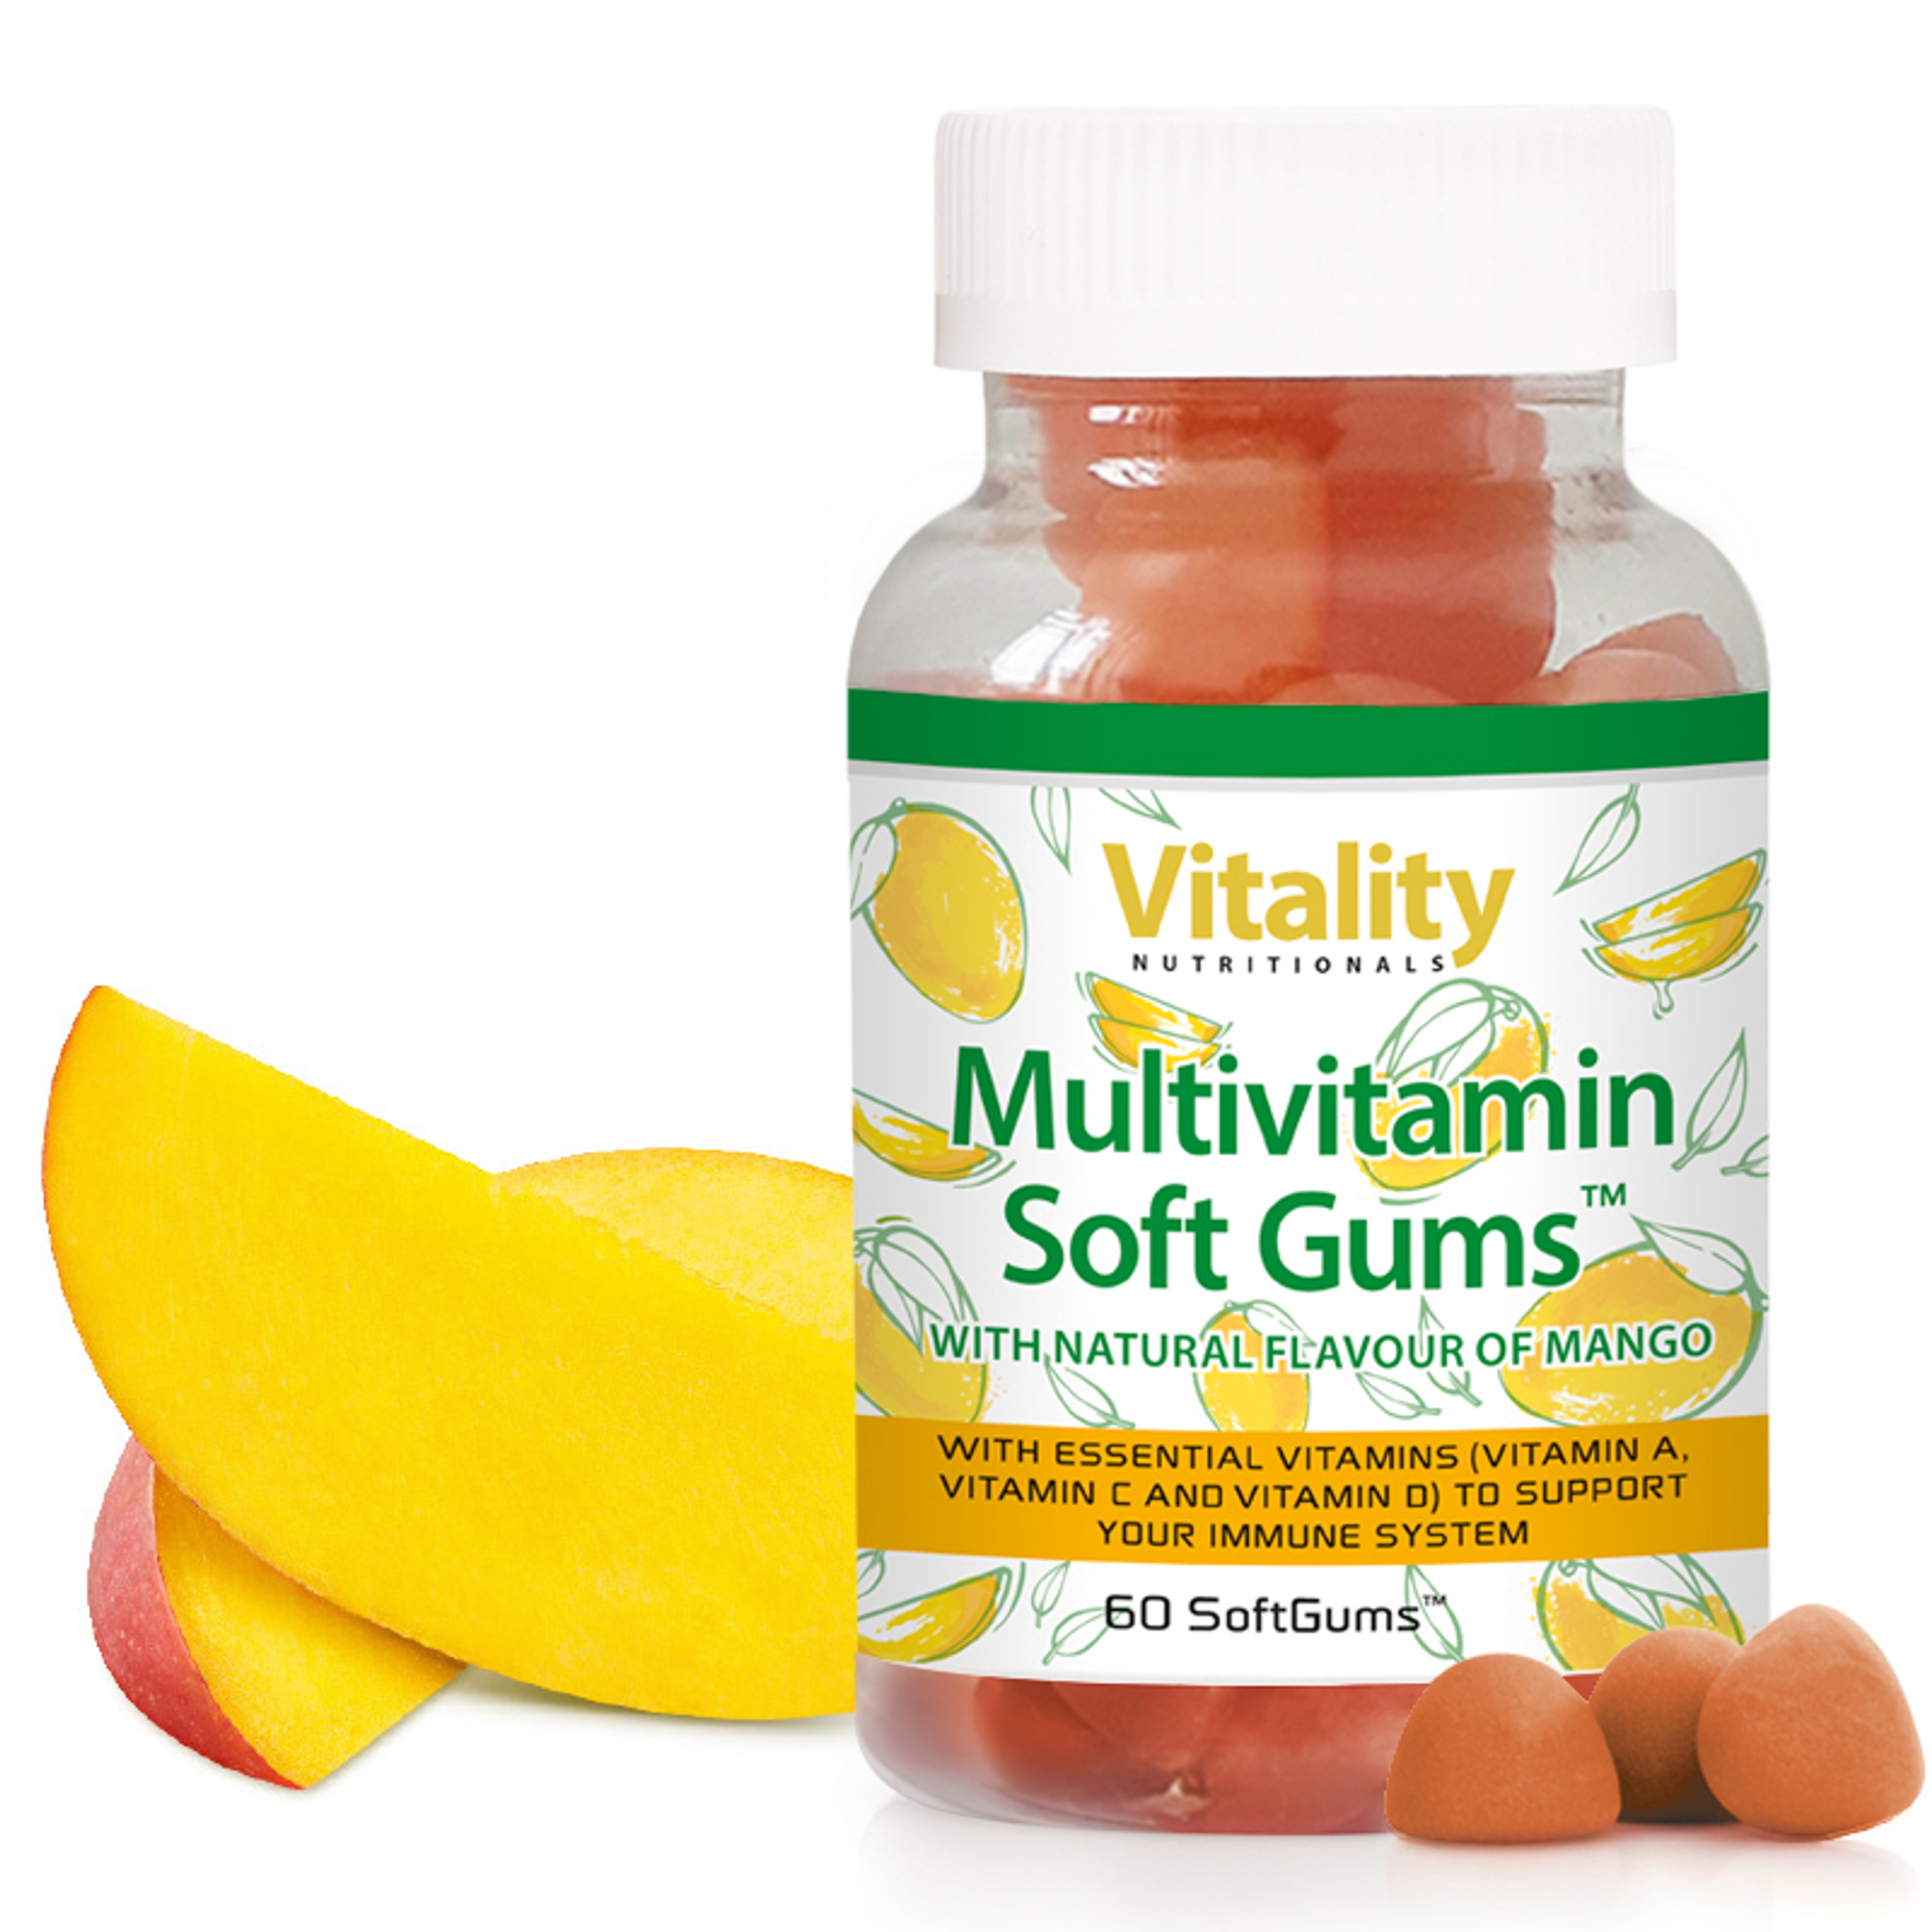 Vitality-Nutritionals-Soft-Gums-mit-neuem-Etikett_04.jpg